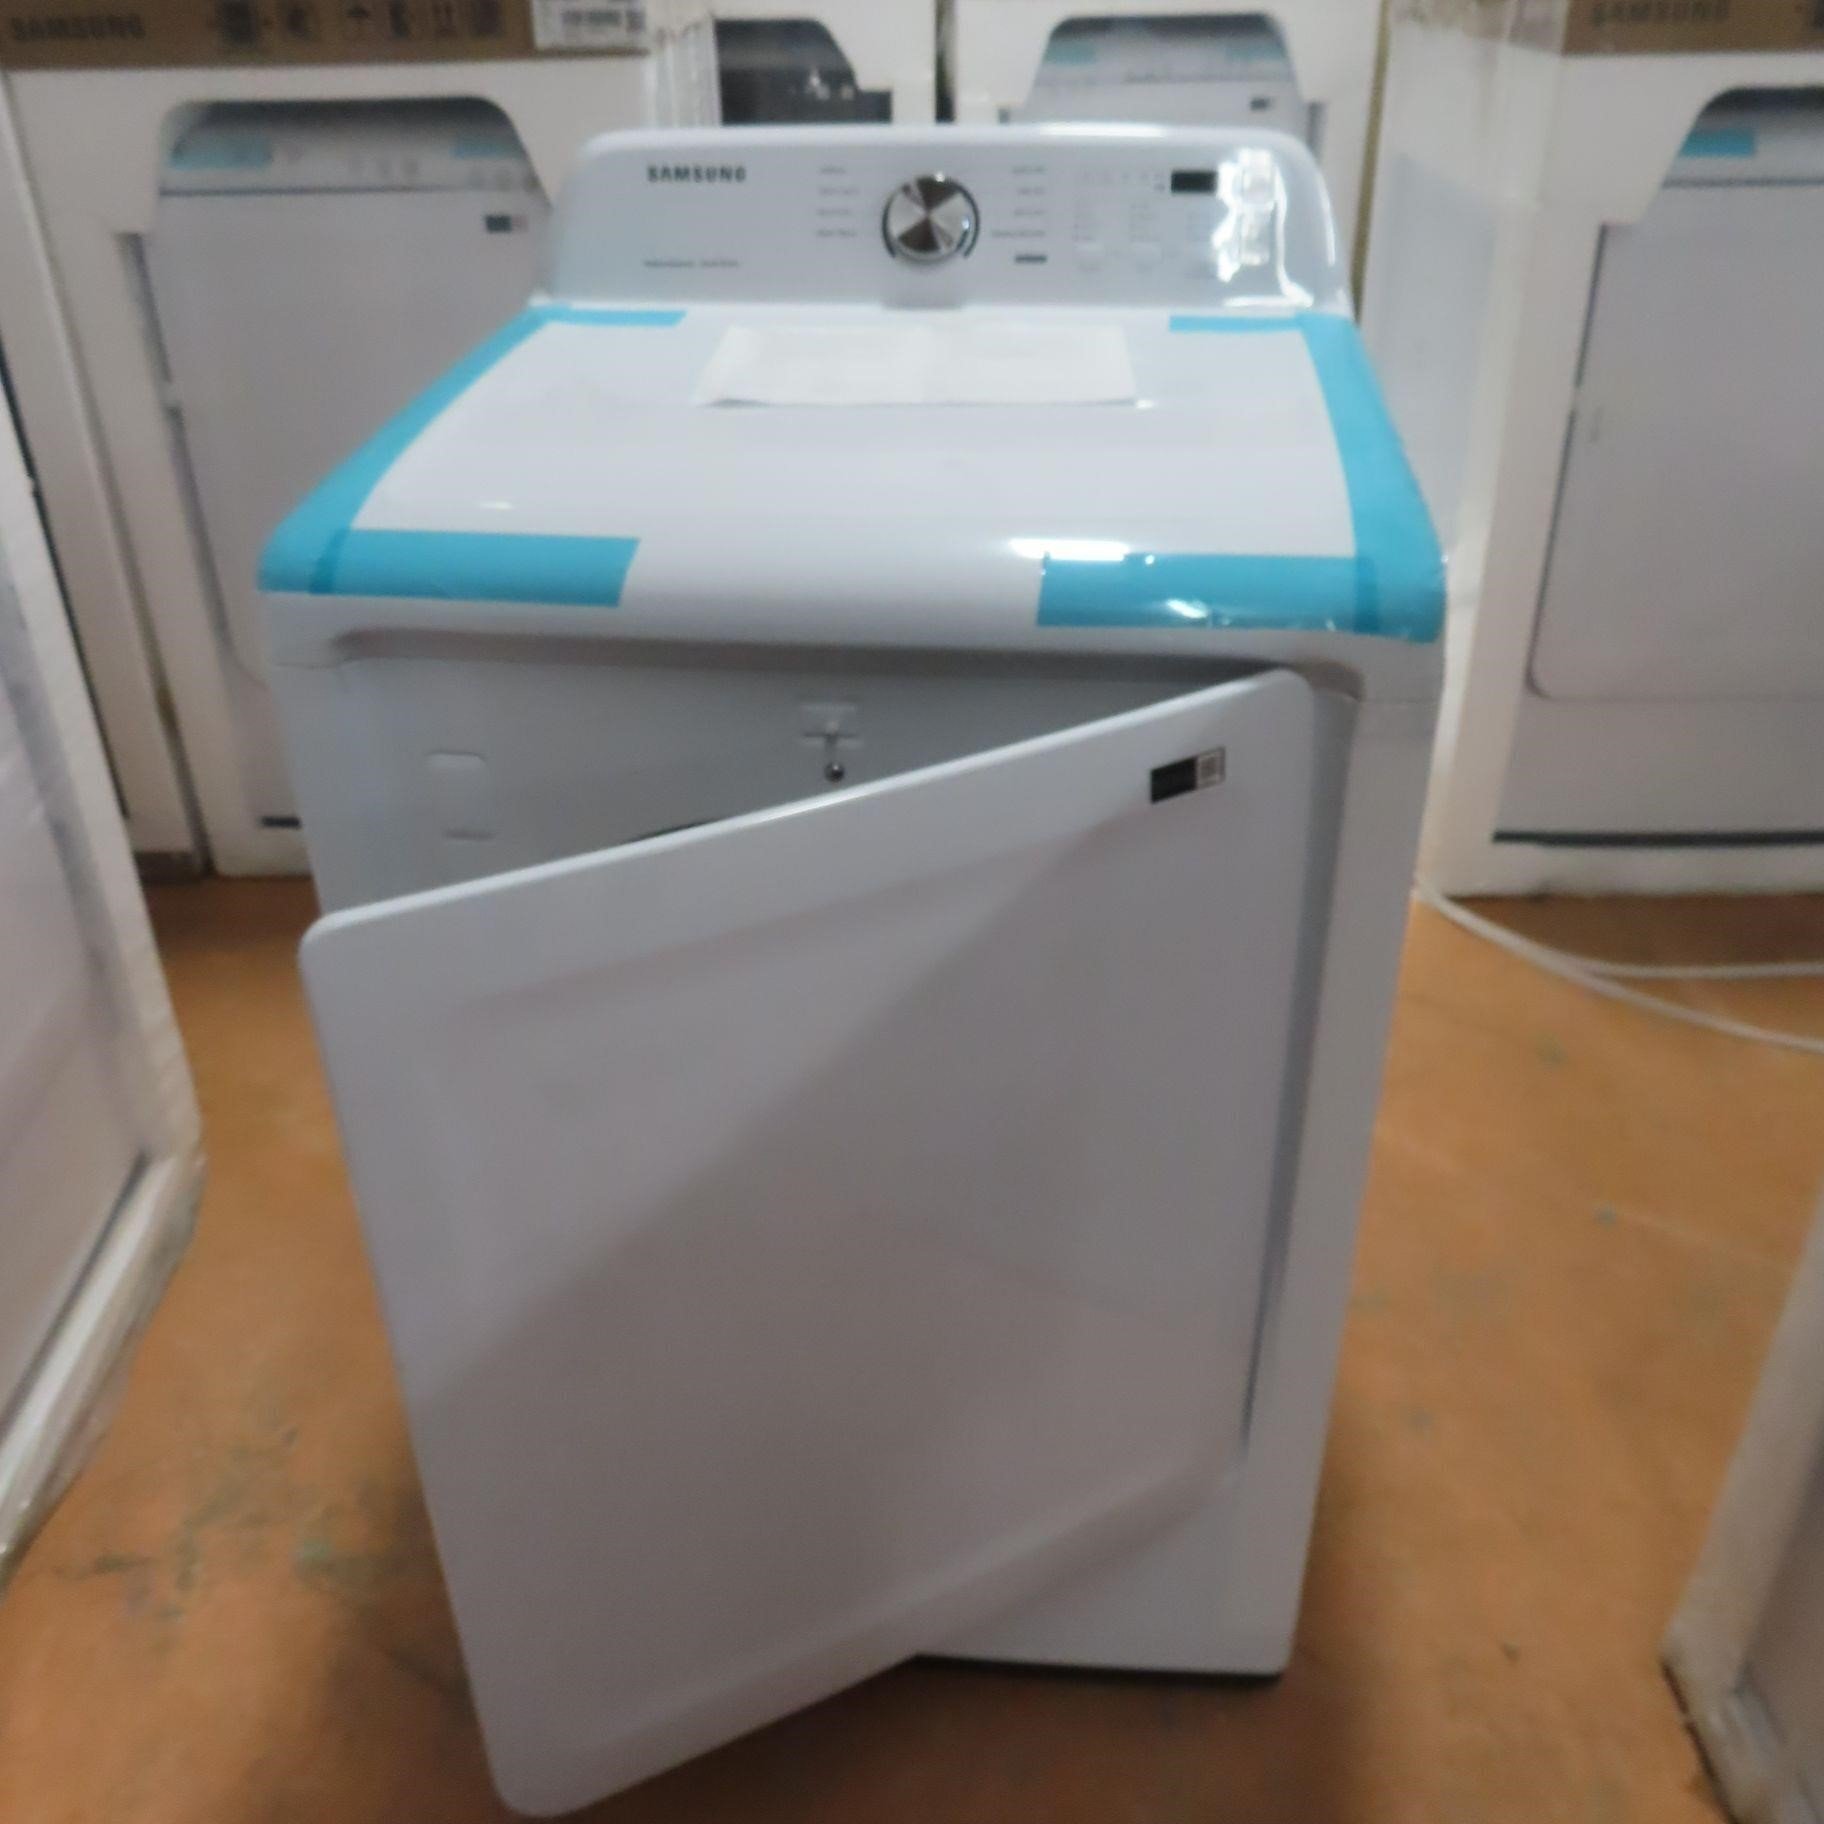 NEW, UNUSED: SAMSUNG 7.2 cu. ft. Electric Dryer